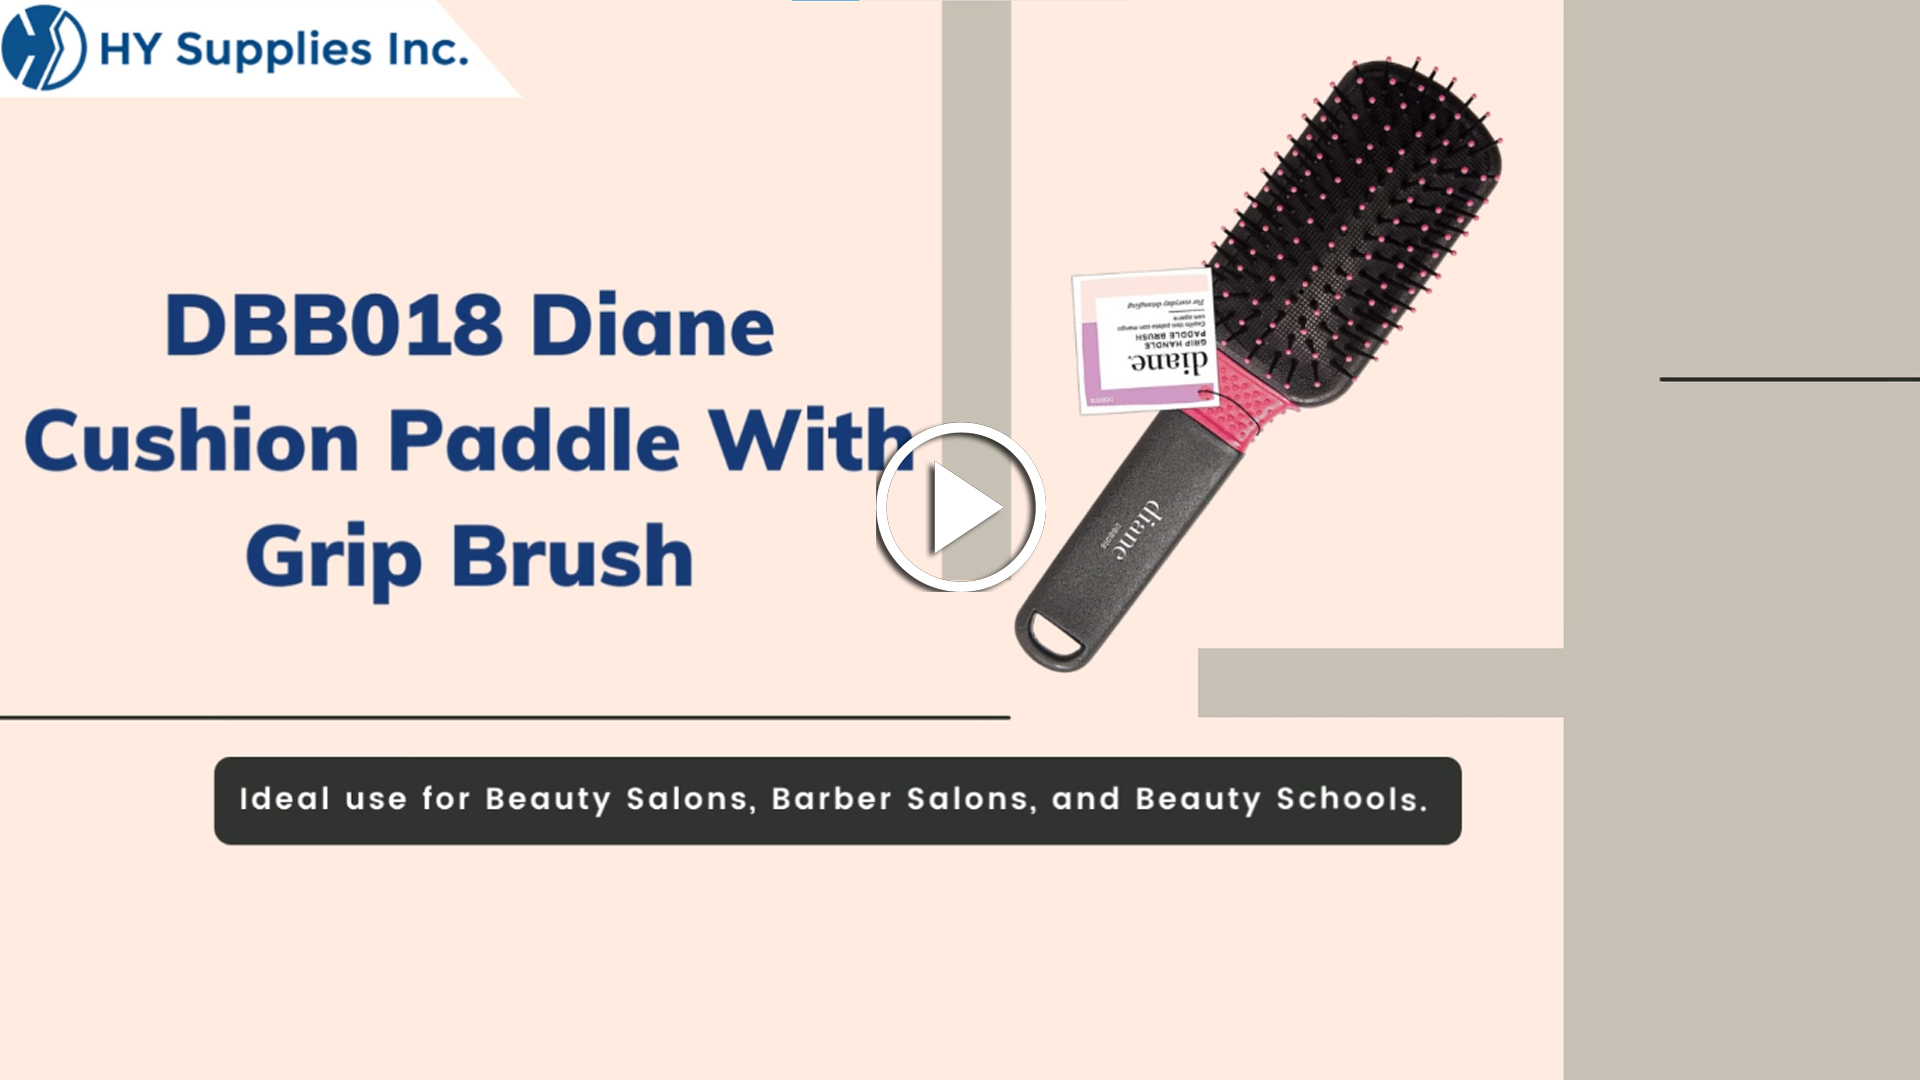 DBB018 Diane Cushion Paddle With Grip Brush